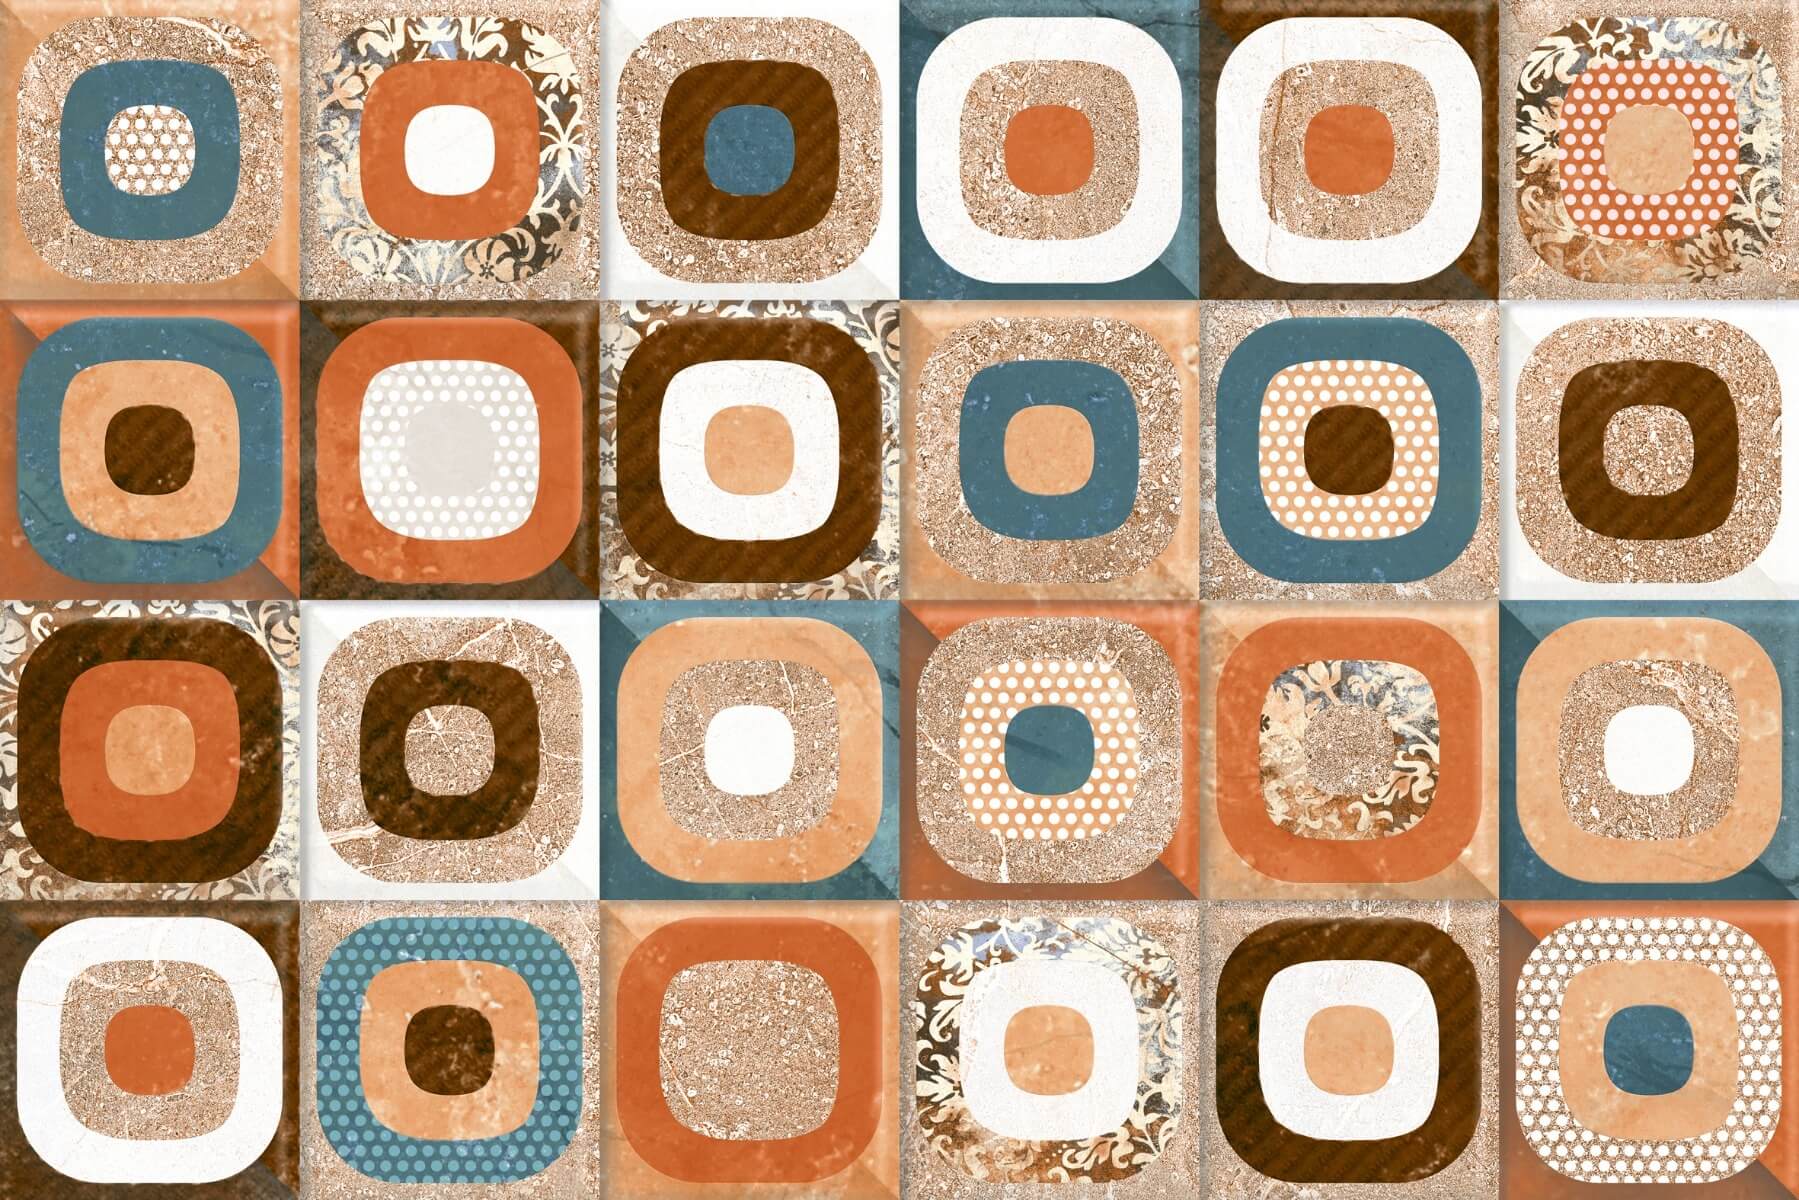 Highlighter Tiles for Bathroom Tiles, Kitchen Tiles, Accent Tiles